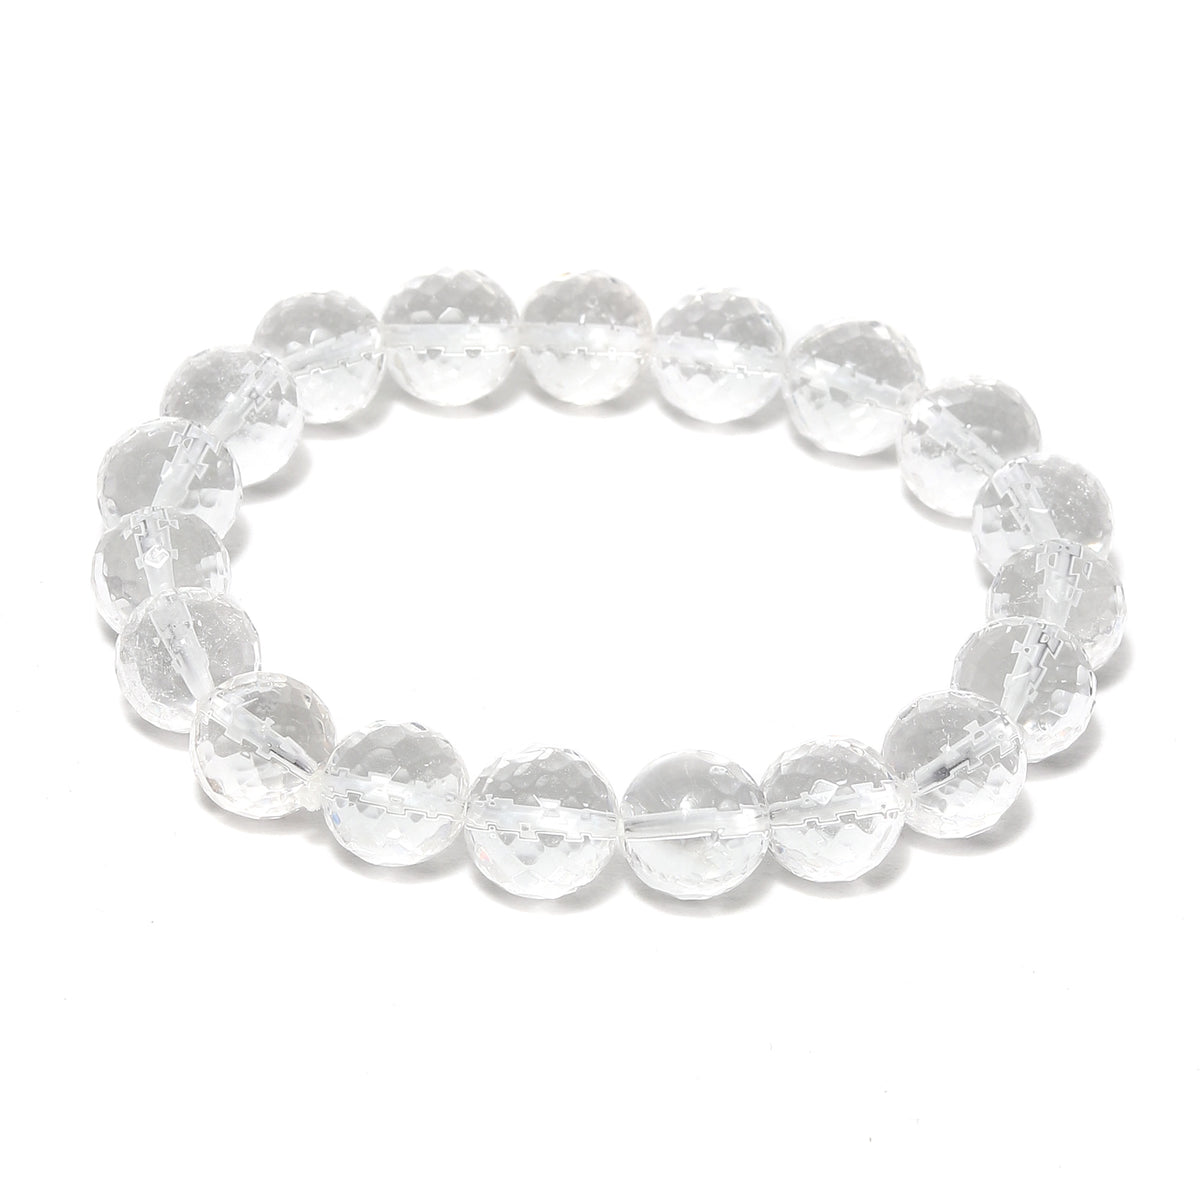 Arihant Gems & Jewels Diamond Cutting Sphatik Bracelet | Natural & Certified | Astrological Bracelet | Reiki/Yoga Healing Distance Charm Bracelet | Unisex Both for Men & Women